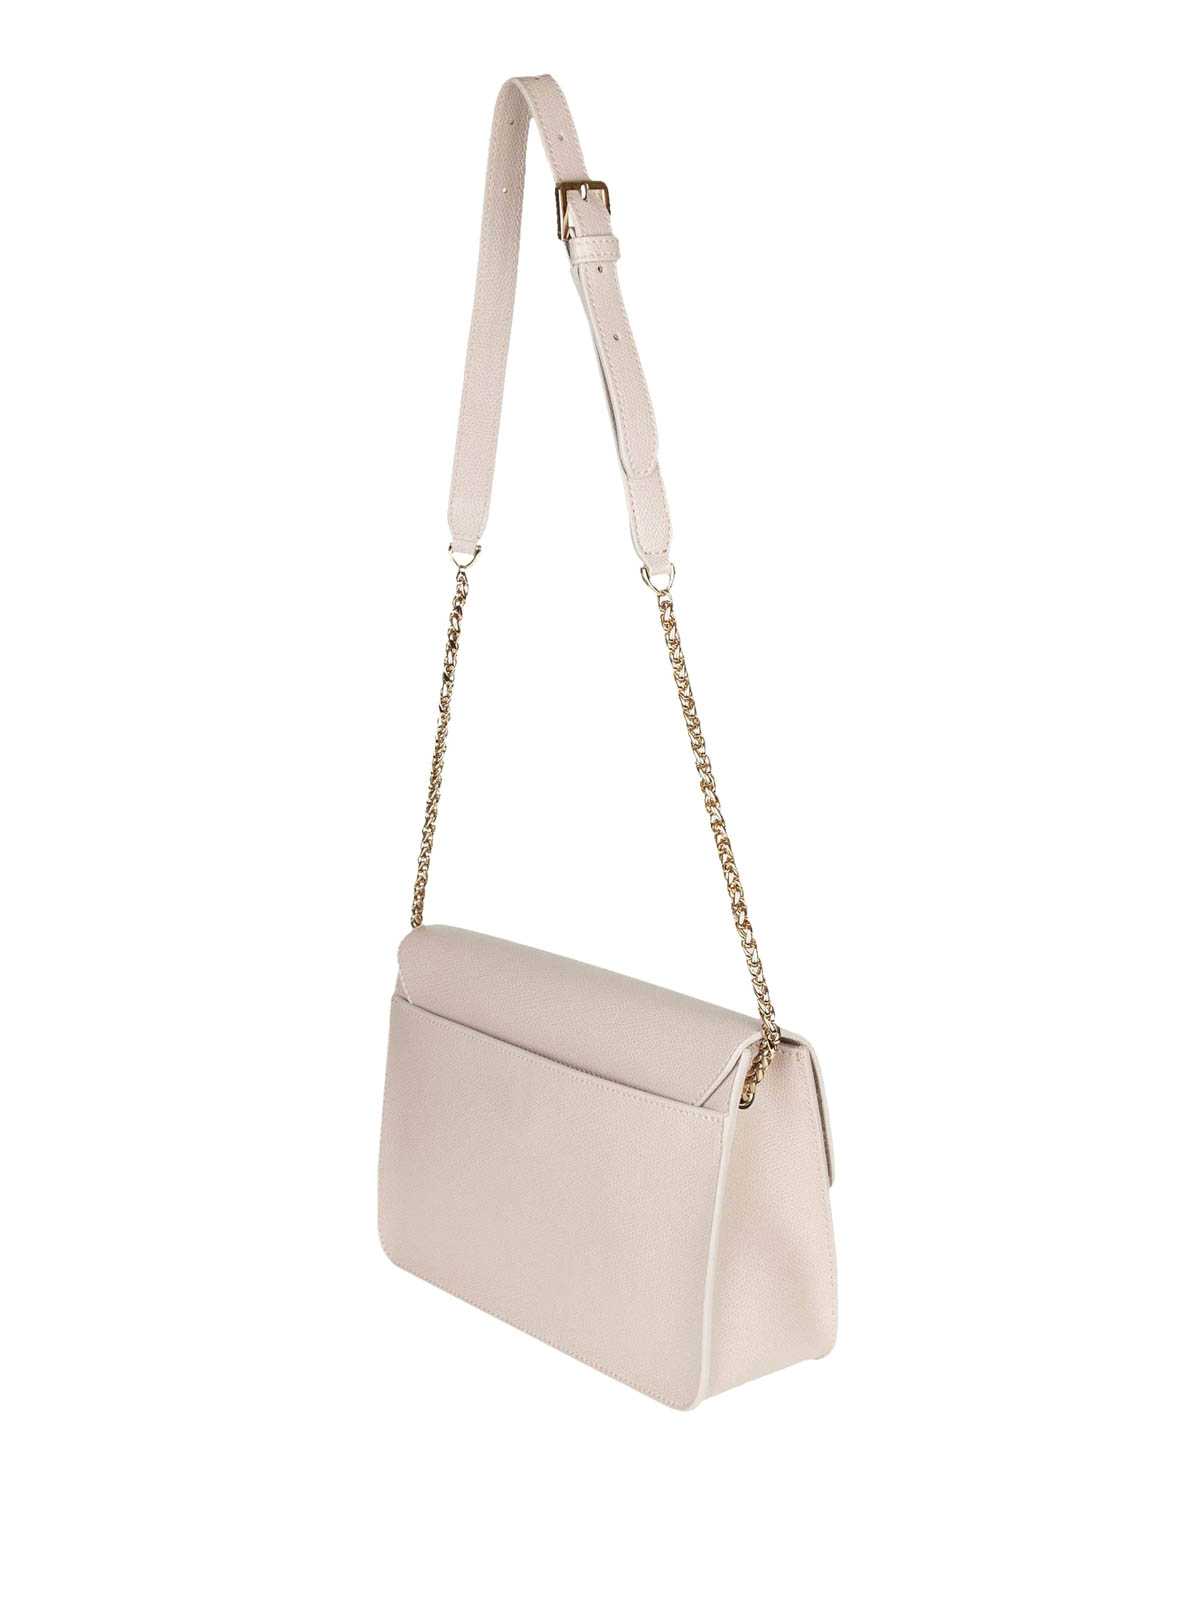 Shoulder bags Furla - Metropolis beige textured leather small bag - 993682